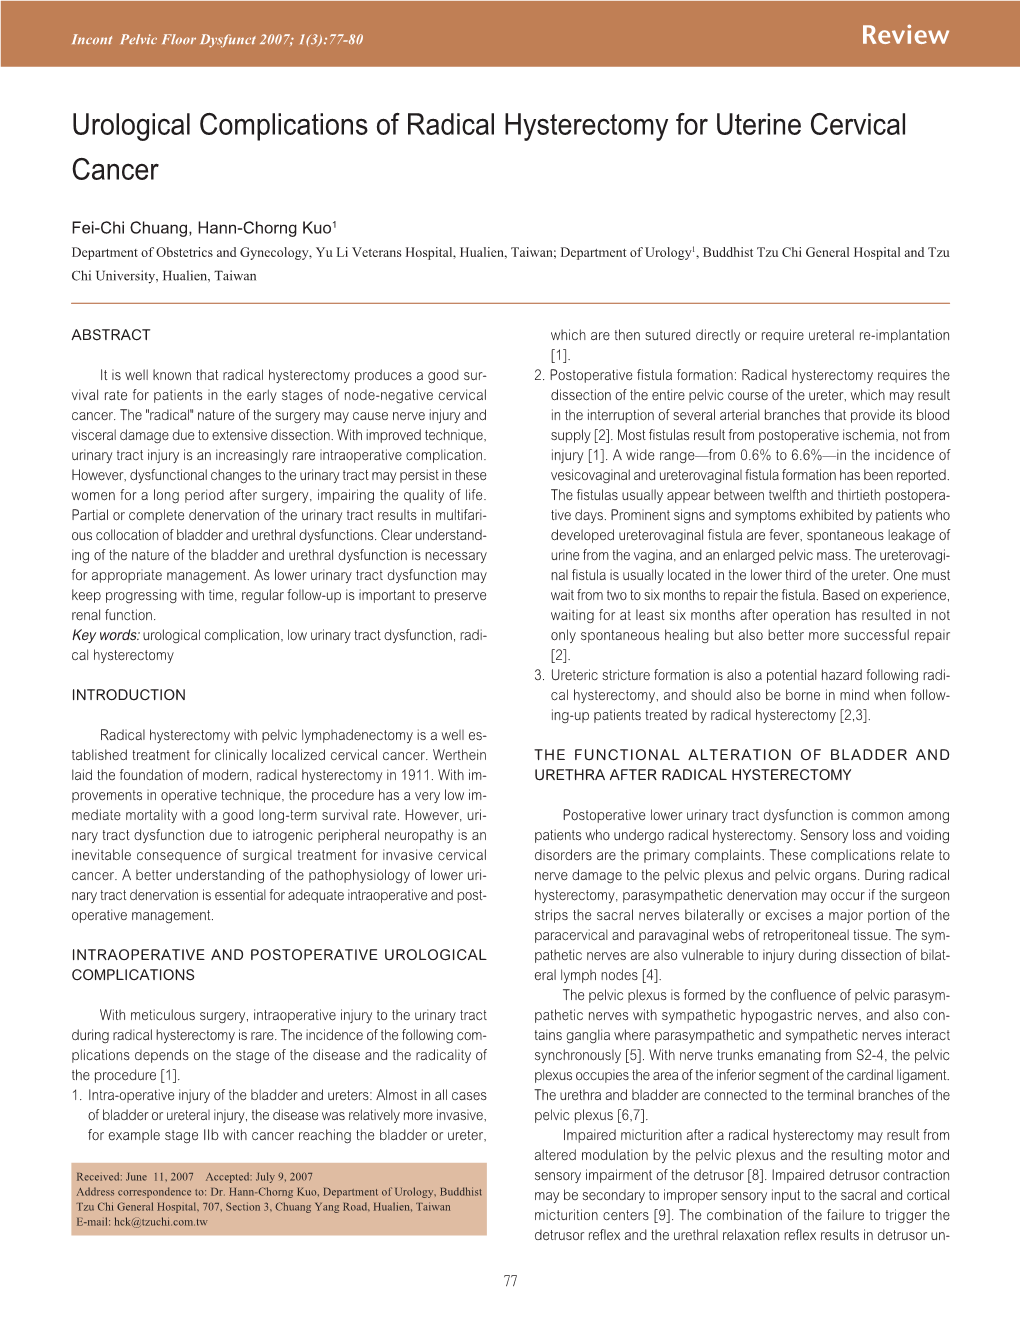 Urological Complications of Radical Hysterectomy for Uterine Cervical Cancer